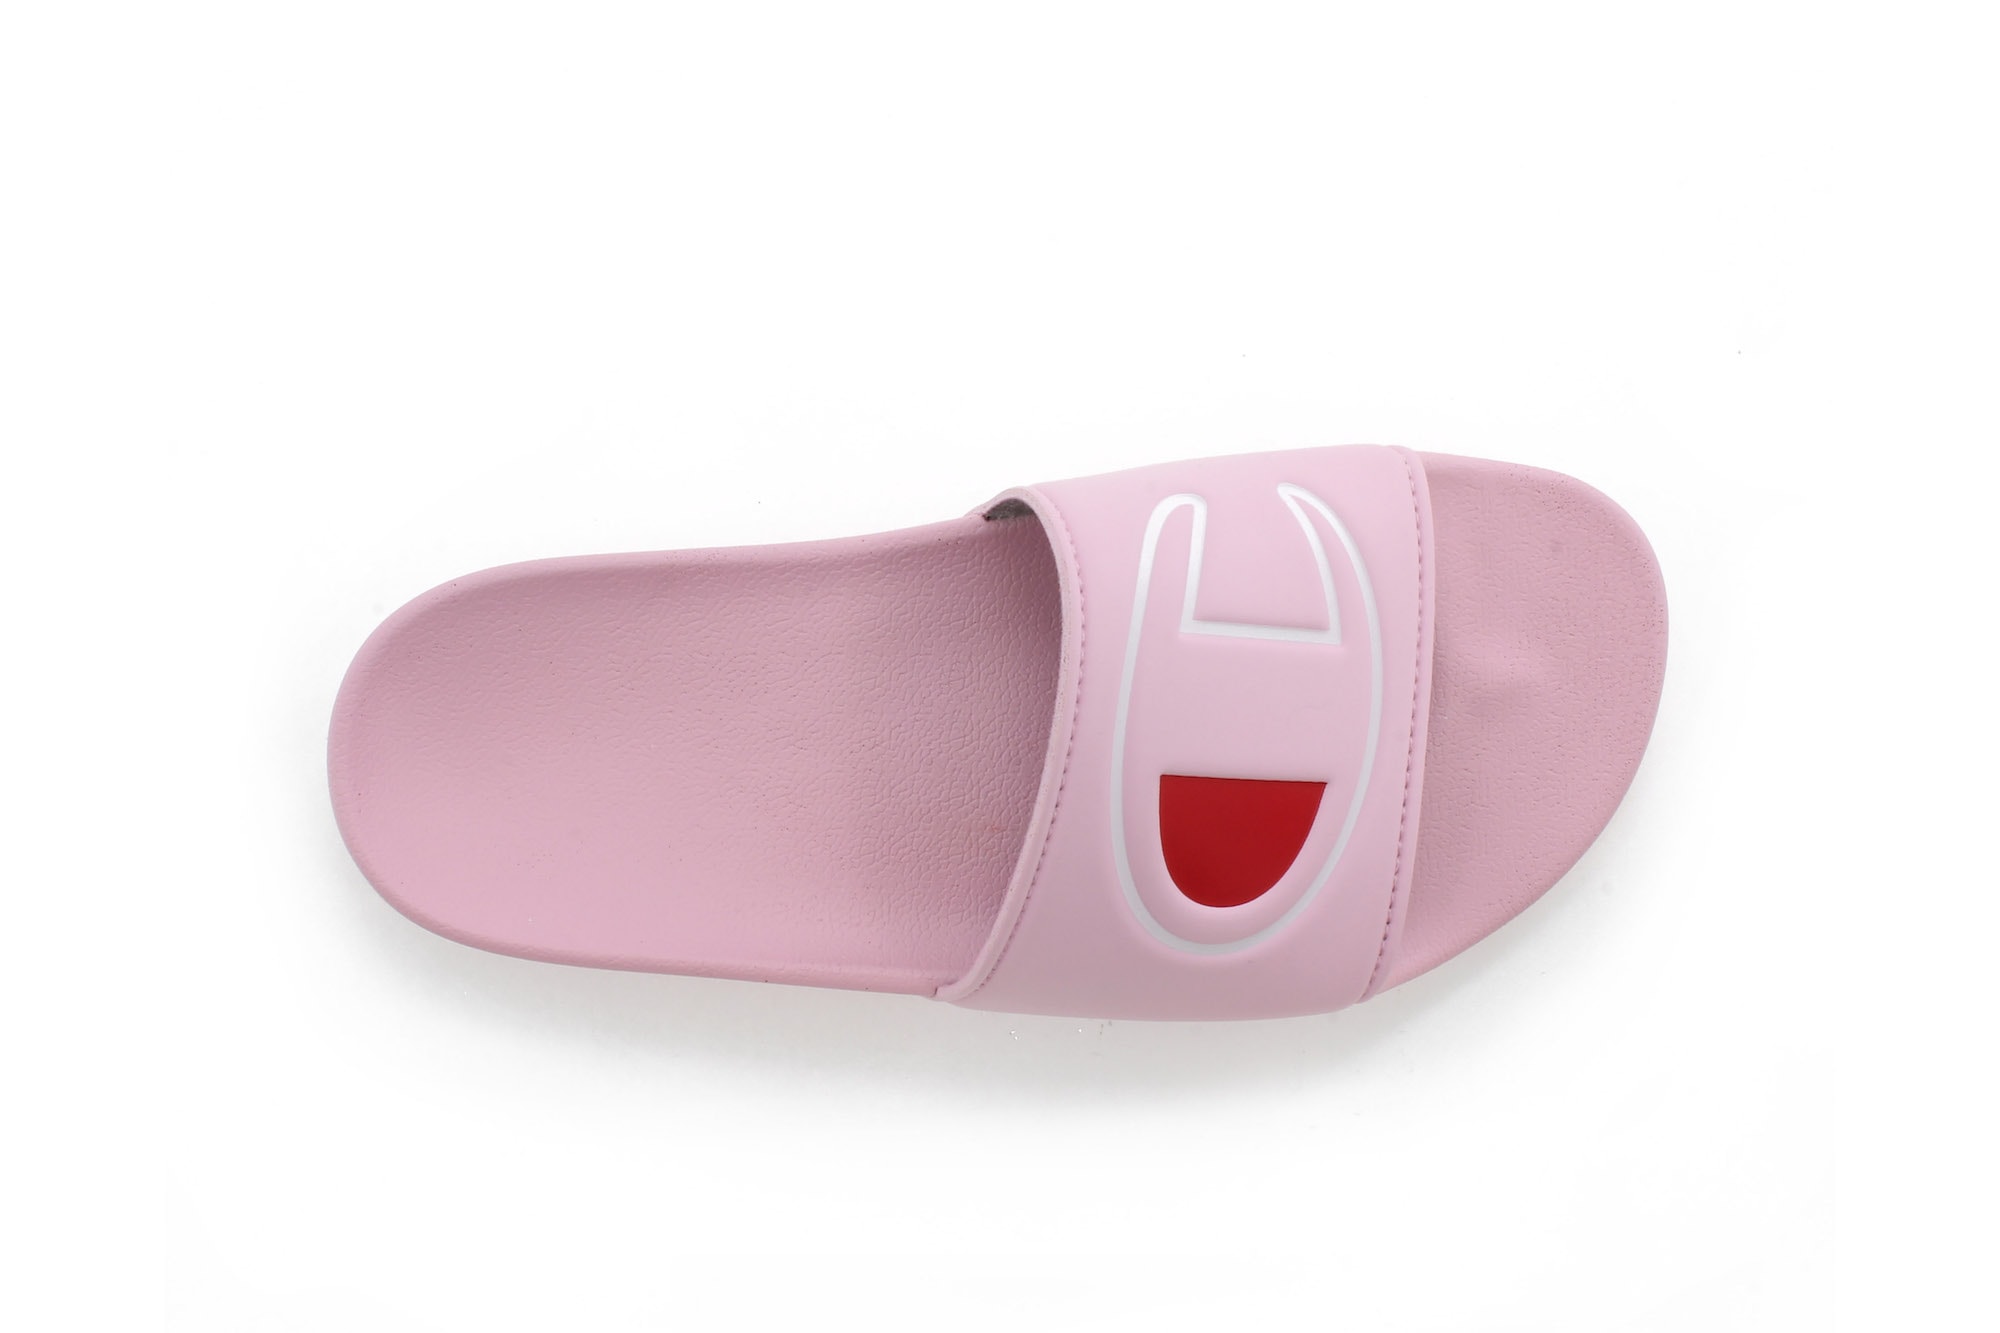 Champion Logo Slides and Flip Flops Summer Collection Shoe Pink White Black Purple Pastel Slide Sandal Shoe Pool Beach